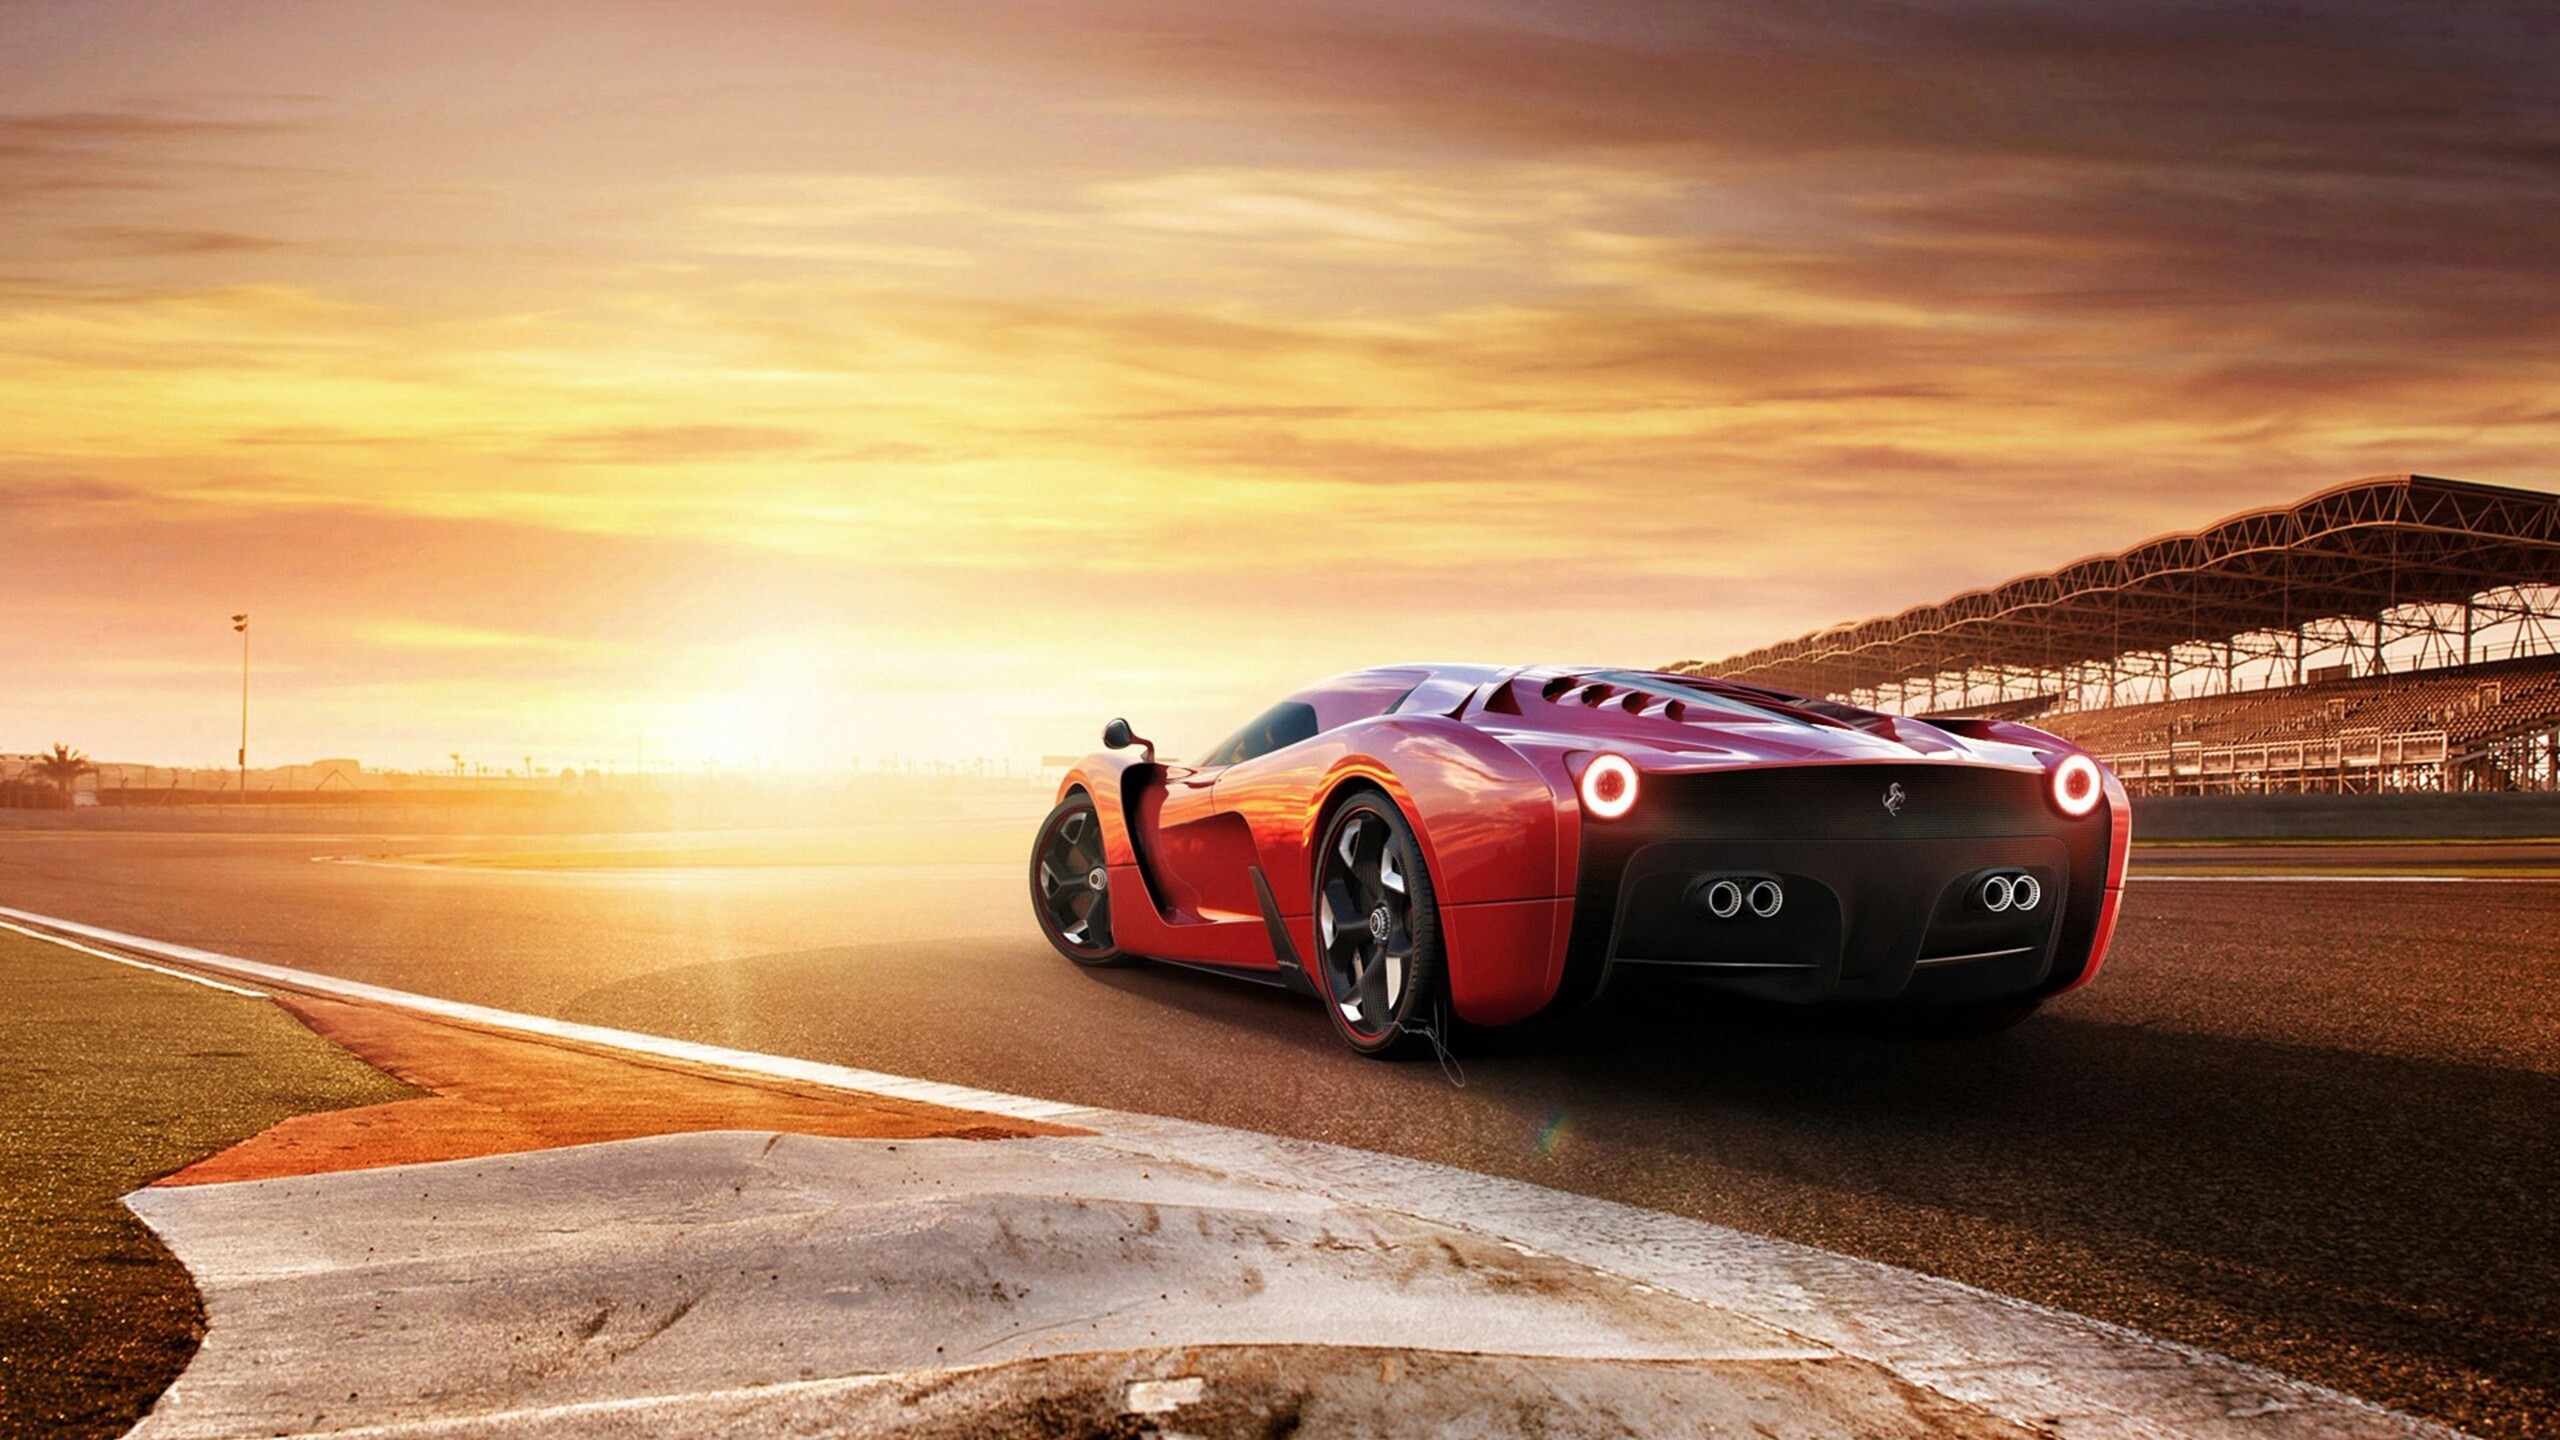 2560x1440 Ferrari 458 Concept Car 1440P Resolution HD 4k ...